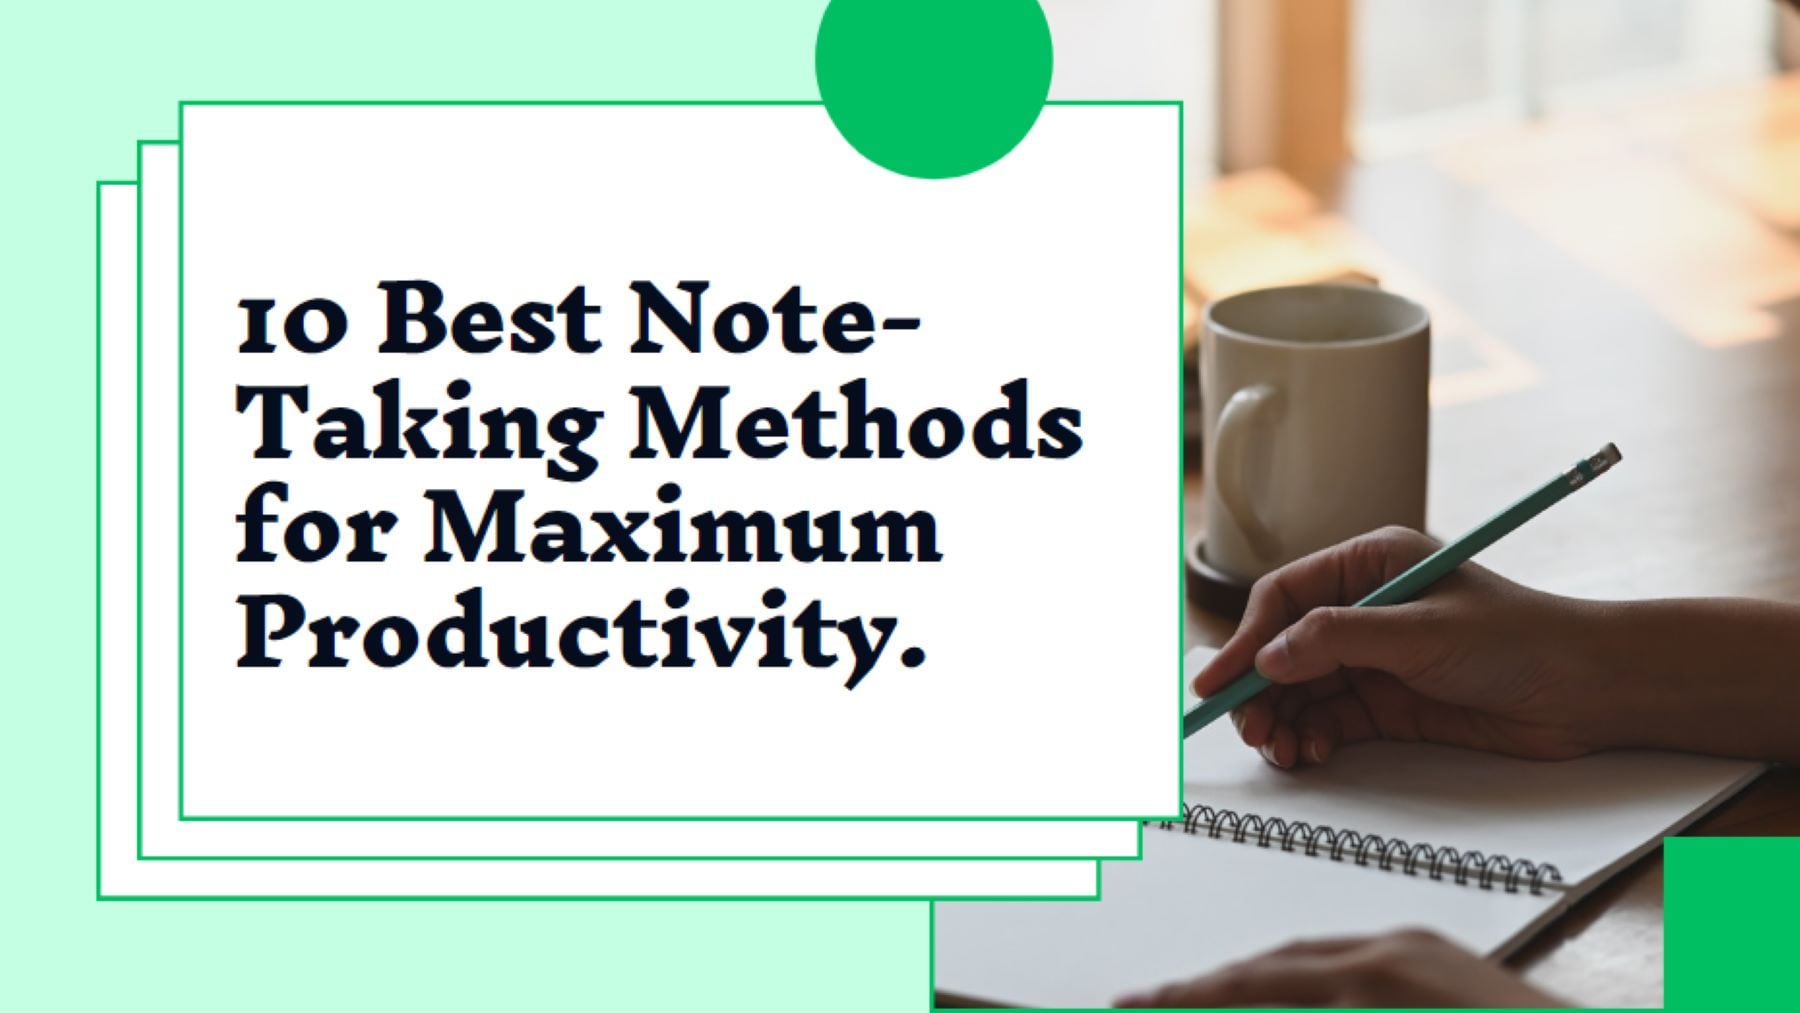 note-taking methods for maximum productivity